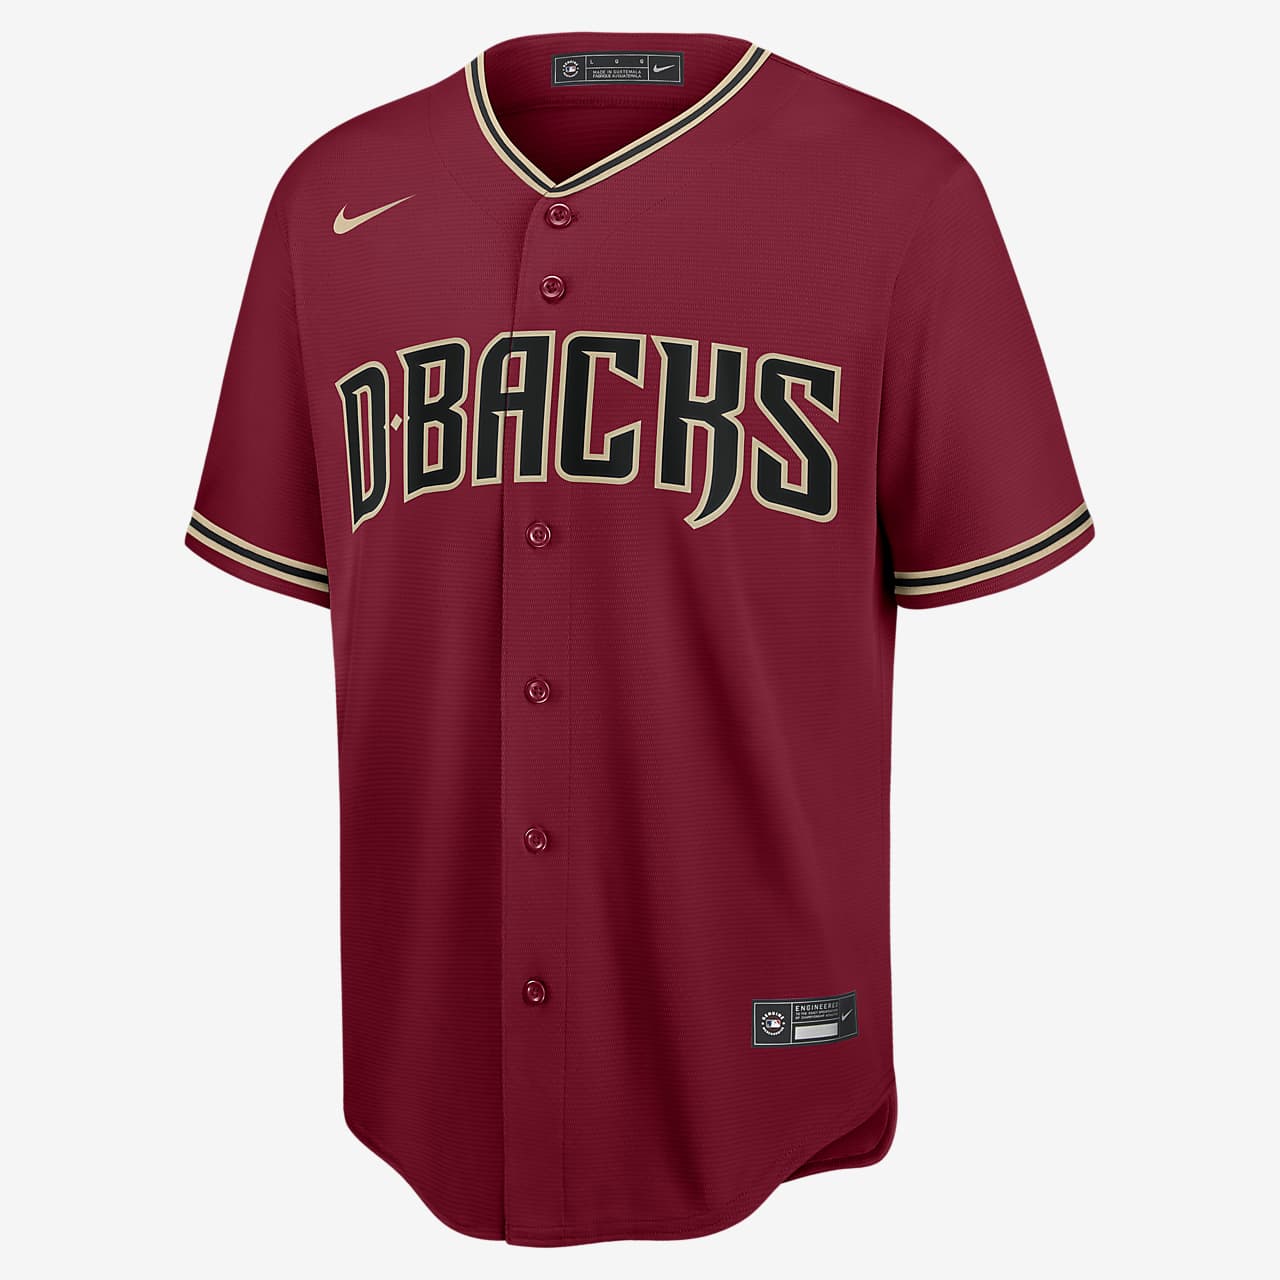 Camiseta de béisbol Réplica para hombre MLB Arizona Diamondbacks (Madison Bumgarner). Nike.com